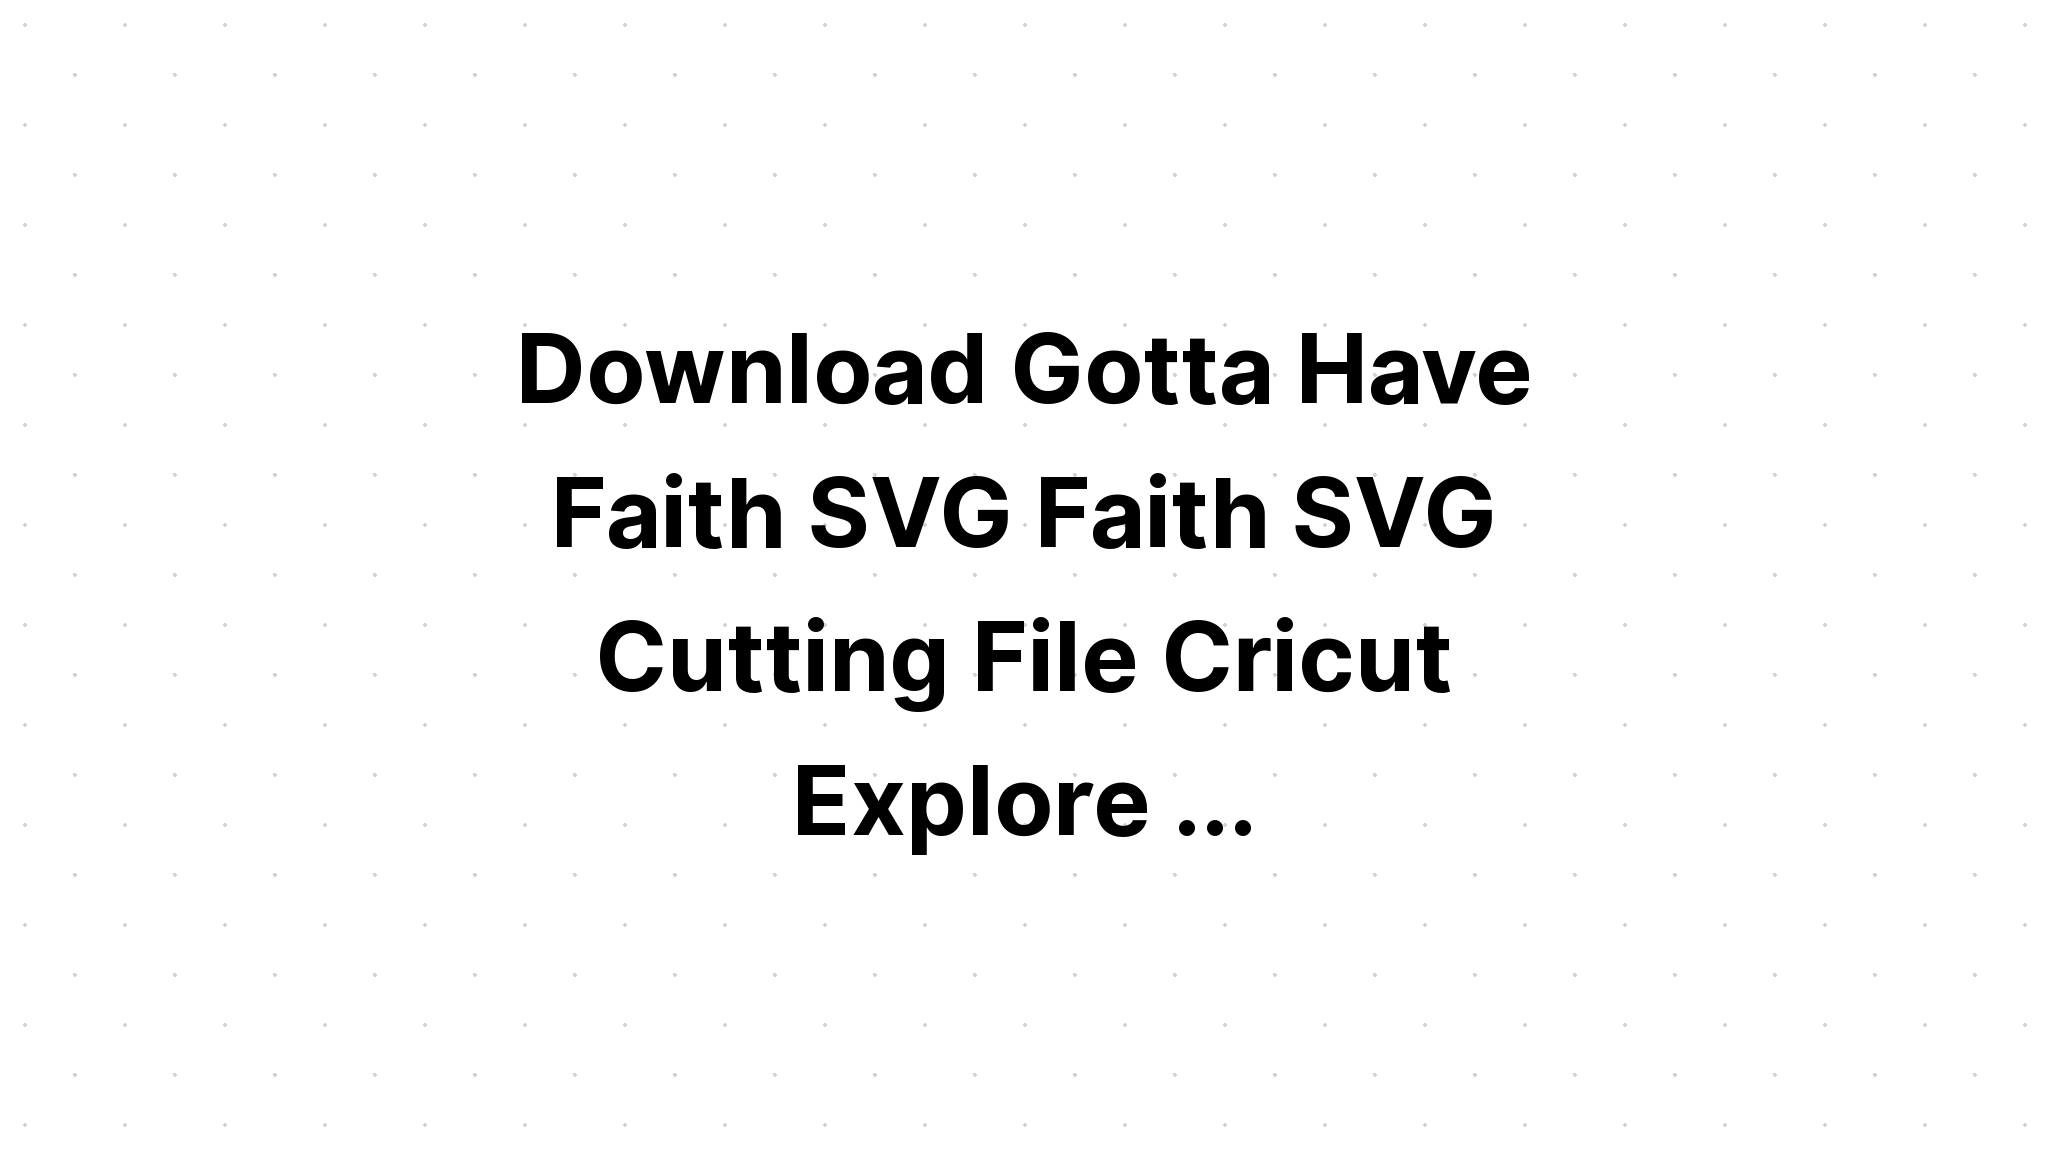 Download Gotta Have Faith SVG File